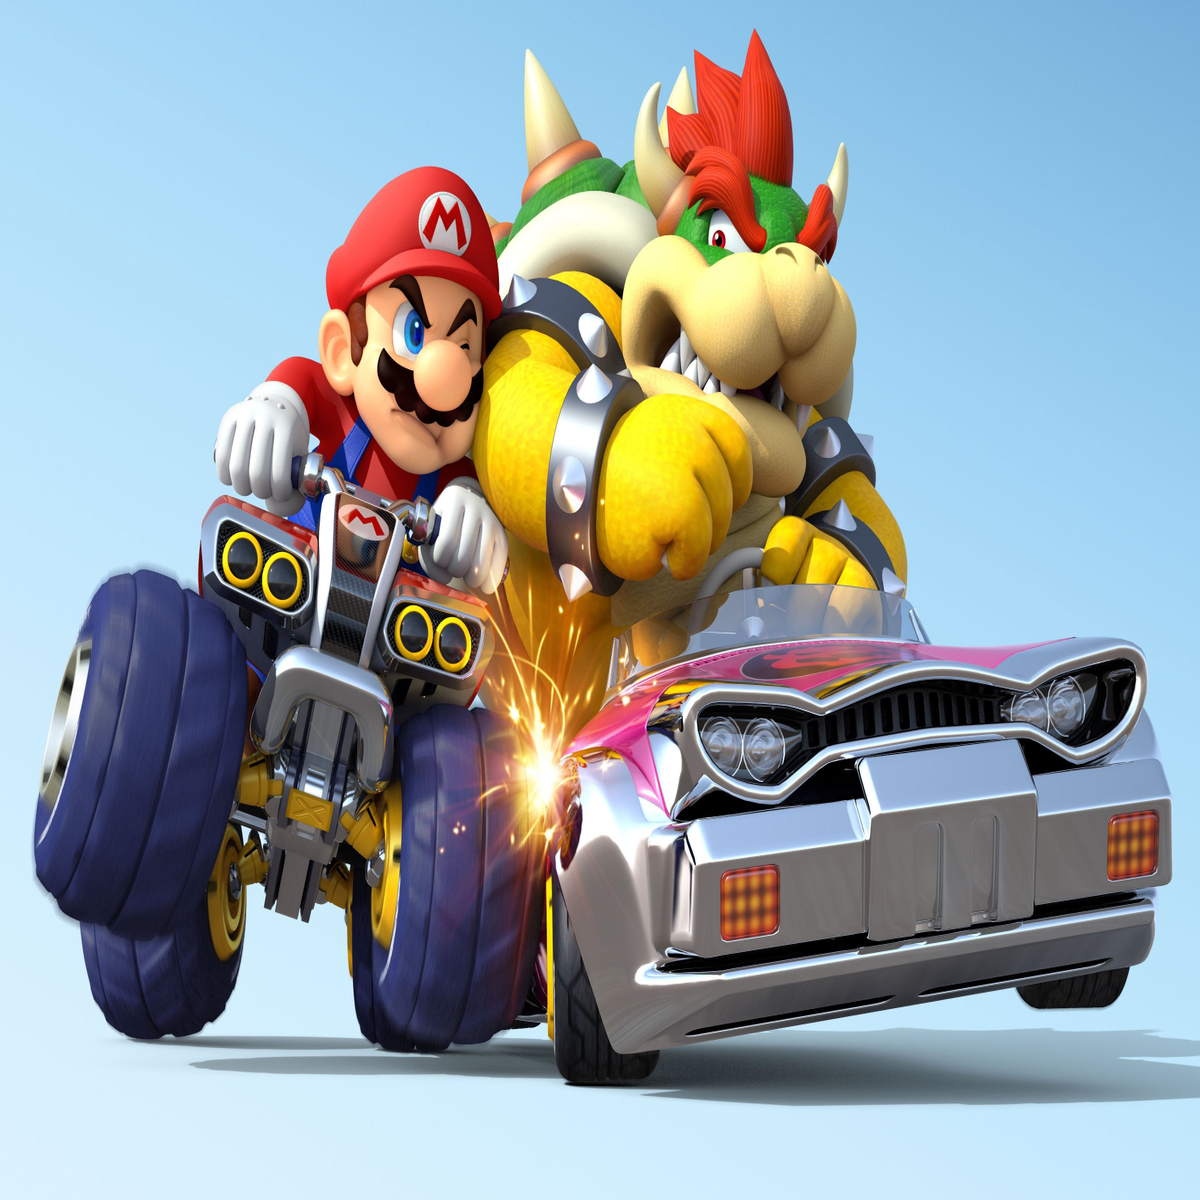 Please, please let Delfino Square join Mario Kart 8 Deluxe